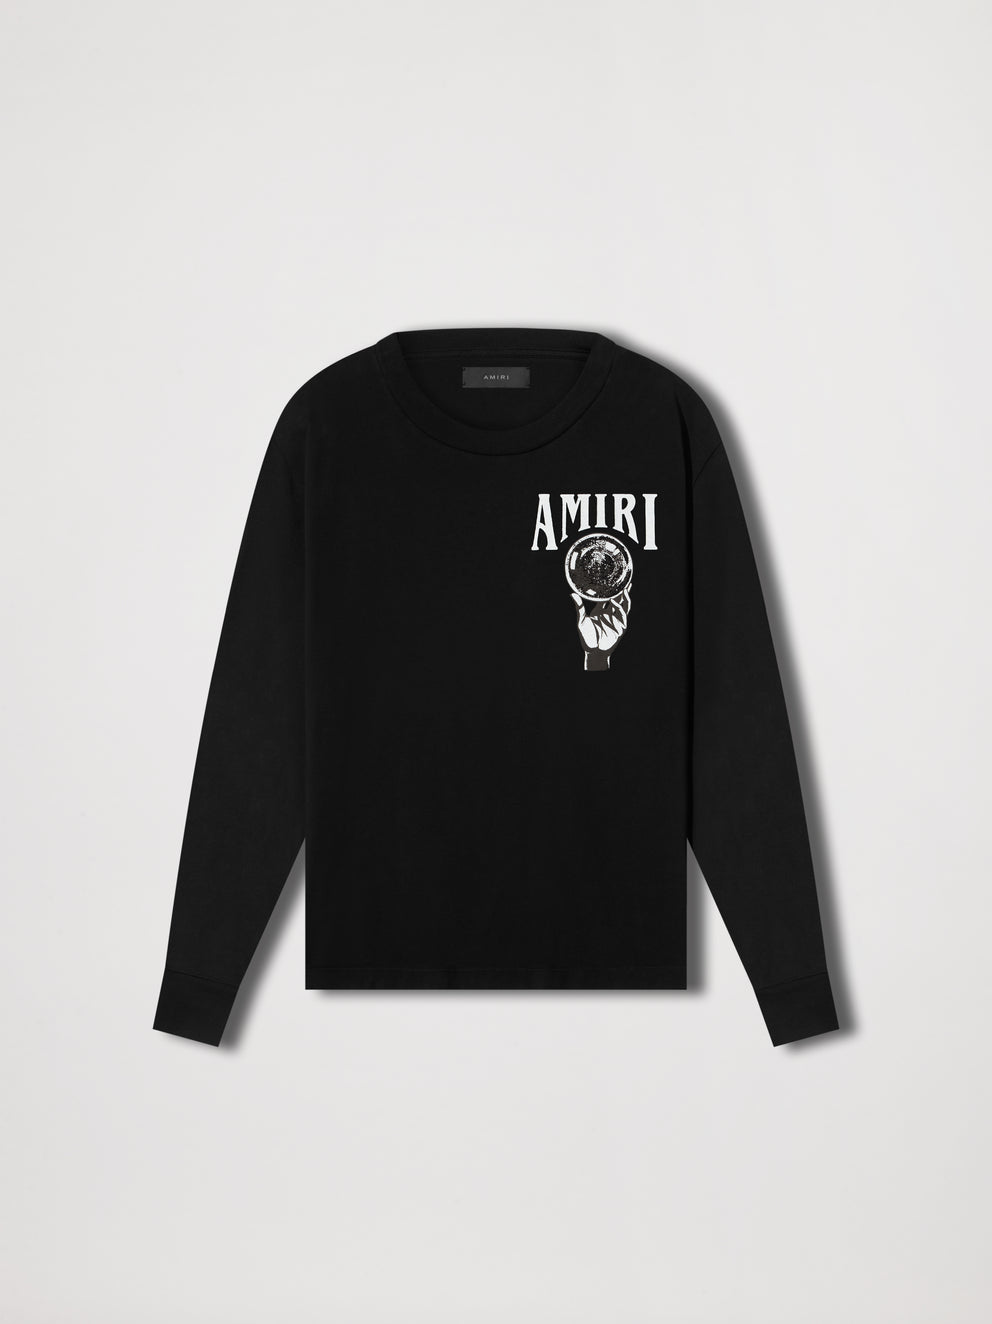 Camisas Amiri Crystal Ball Long Sleeve Hombre Negras | 5904EABKV